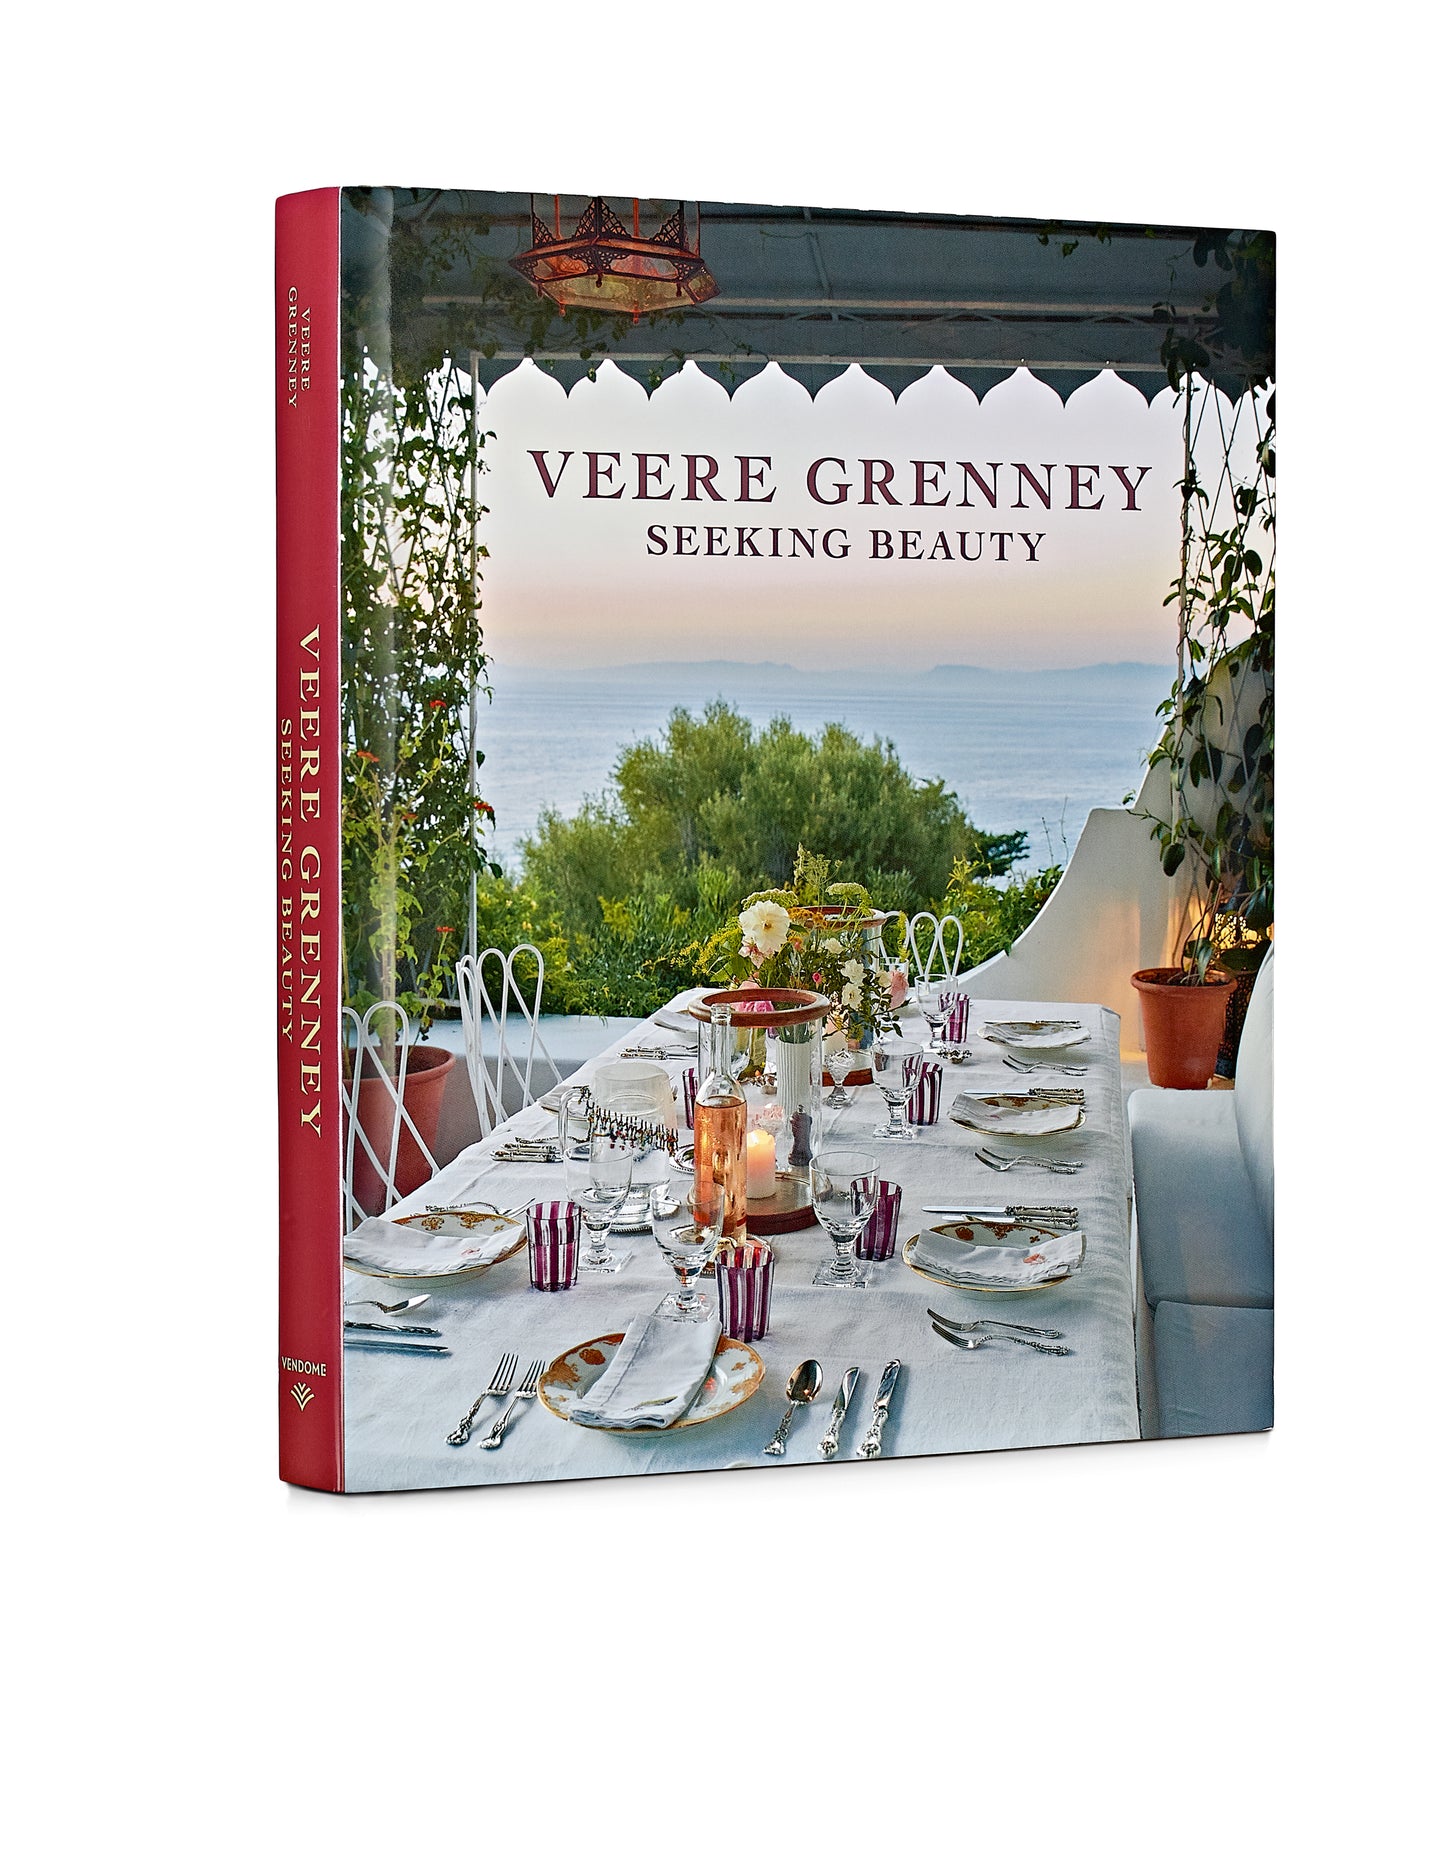 Veere Grenney Home: Seeking Beauty - Signature Edition